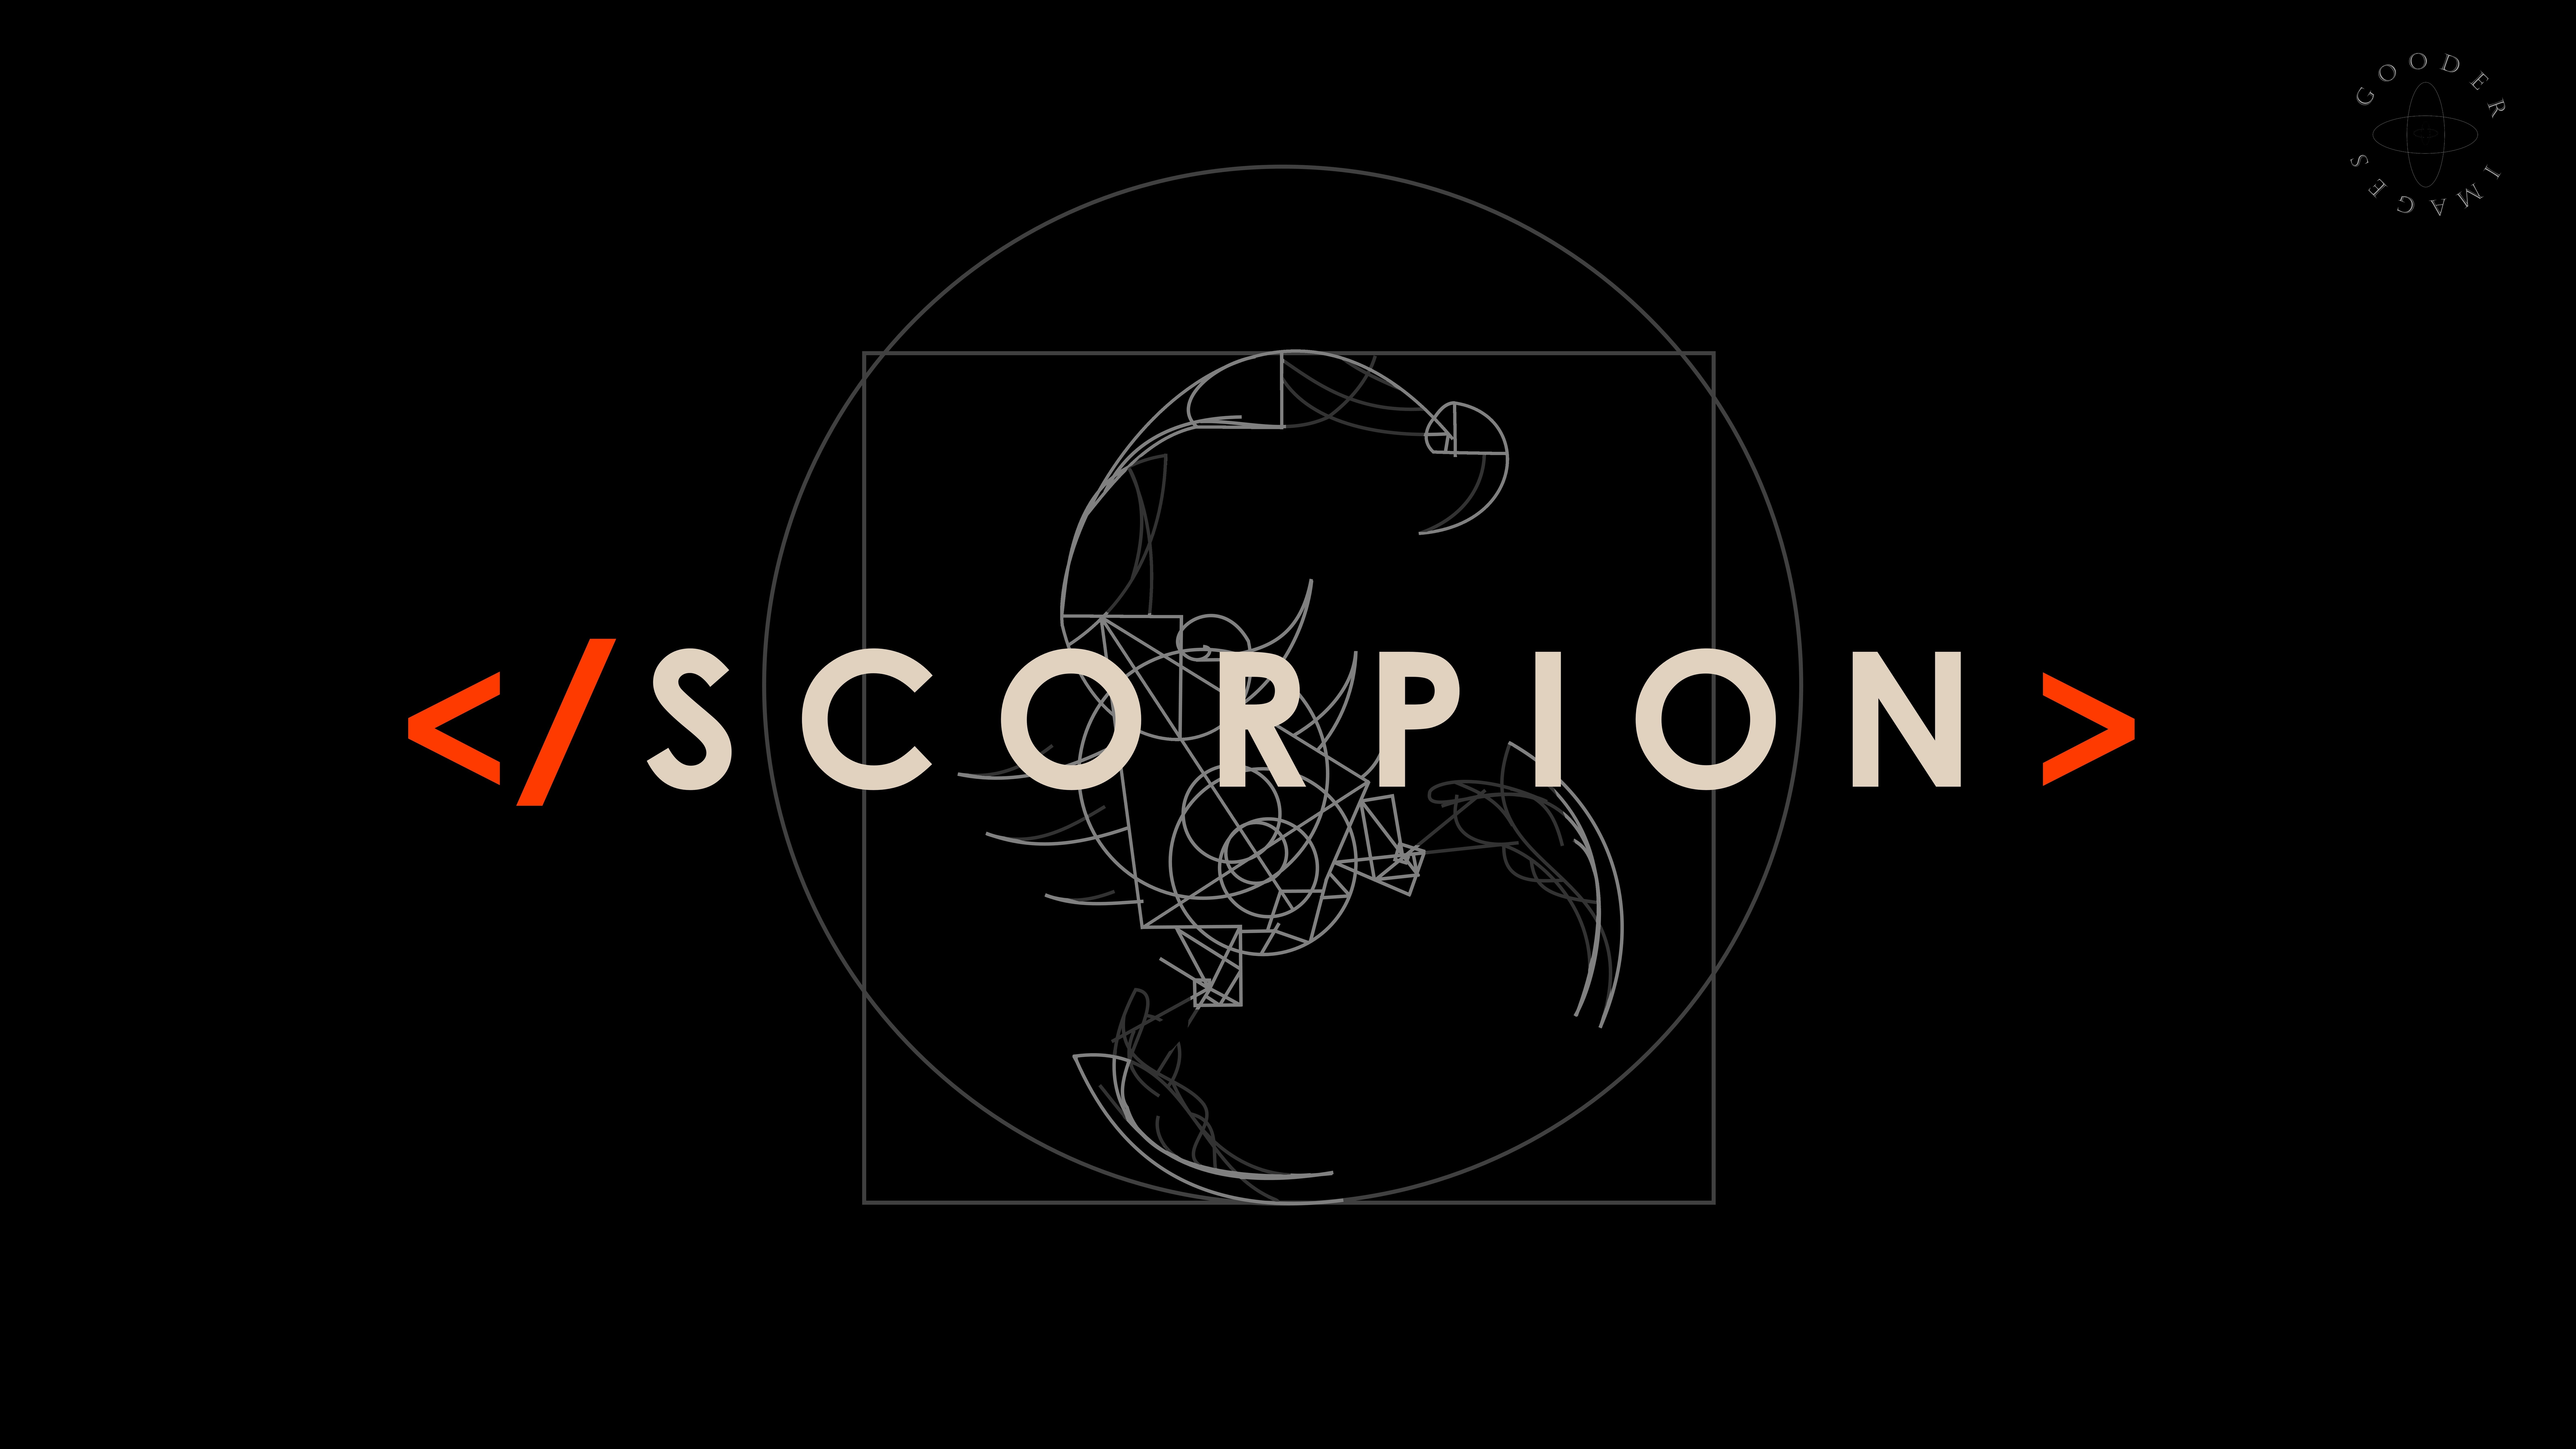 Scorpion Tv Show Logo, HD Tv Shows, 4k Wallpaper, Image